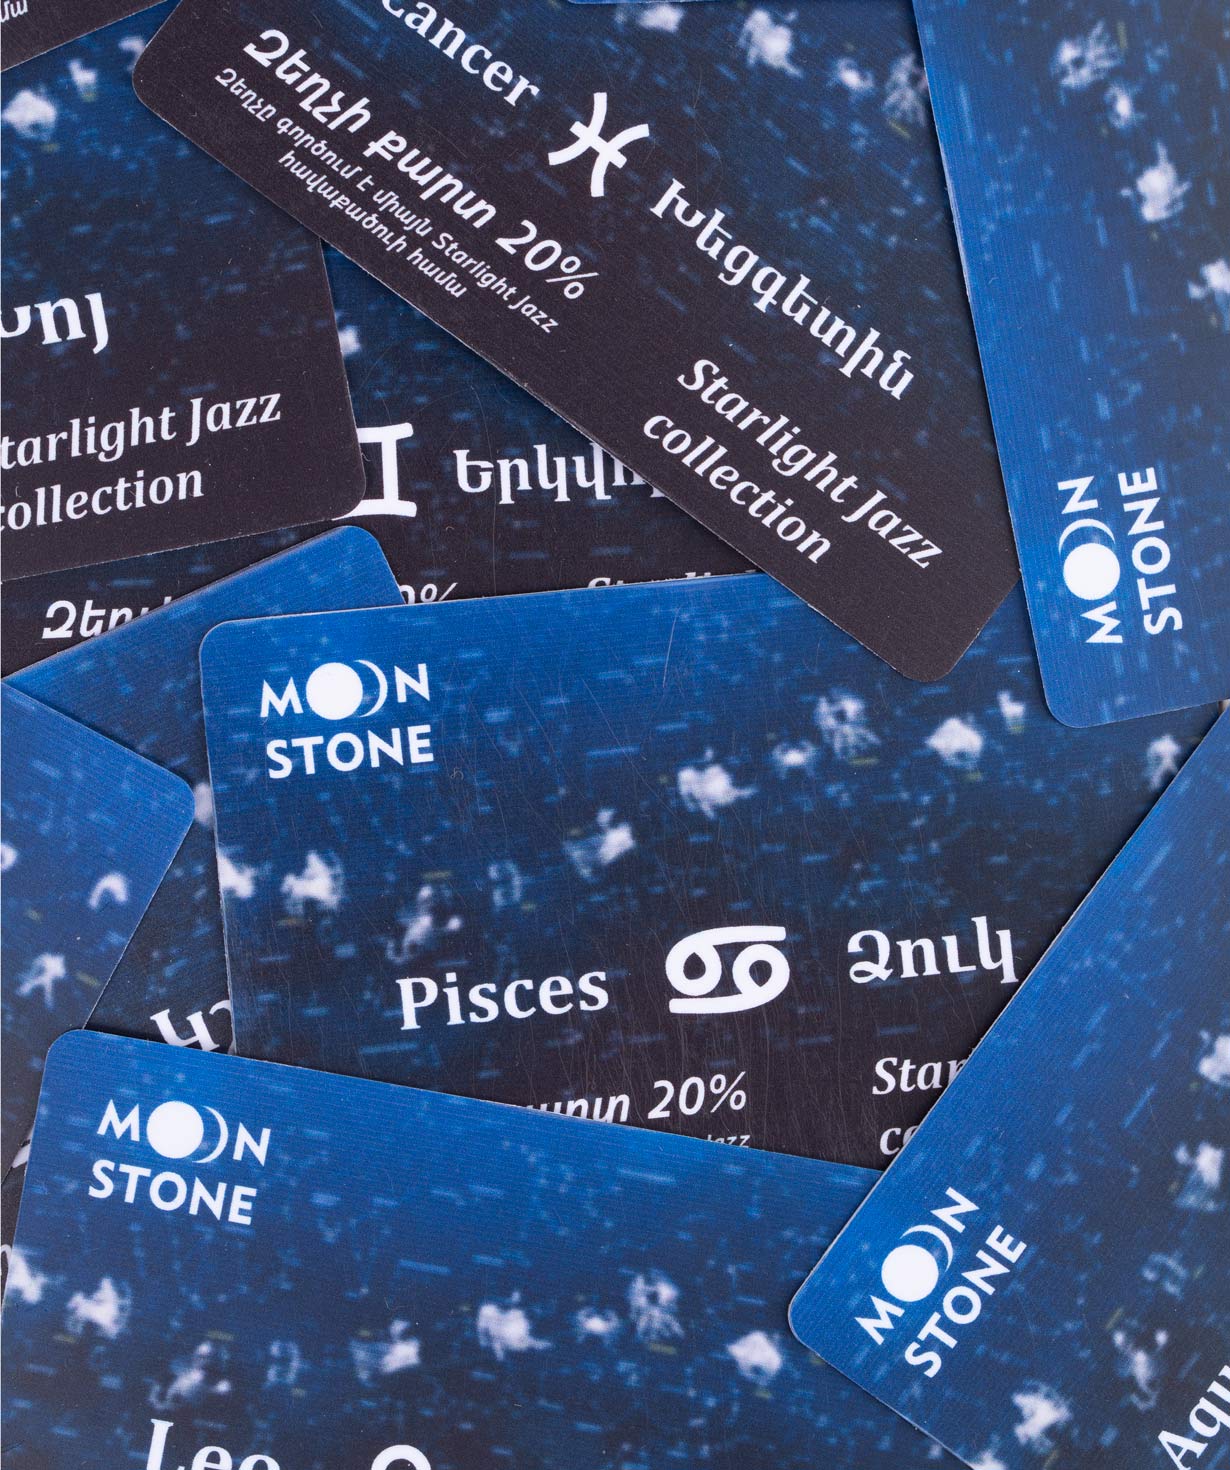 Rhodium Plated Silver Pendant Taurus Starlight Jazz Collection